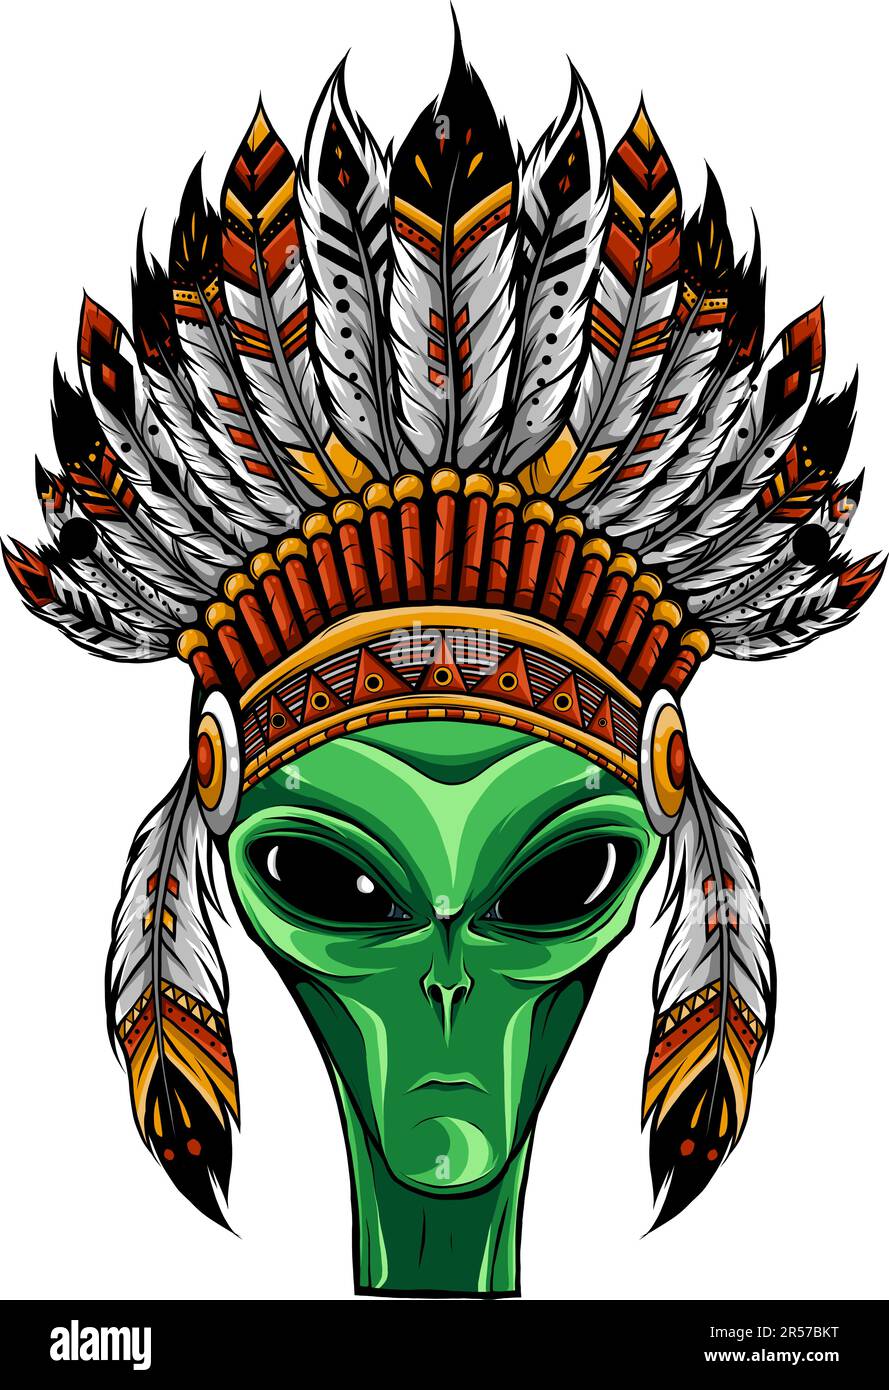 Alien head in indian headdress vector illustration on white background Stock Vector